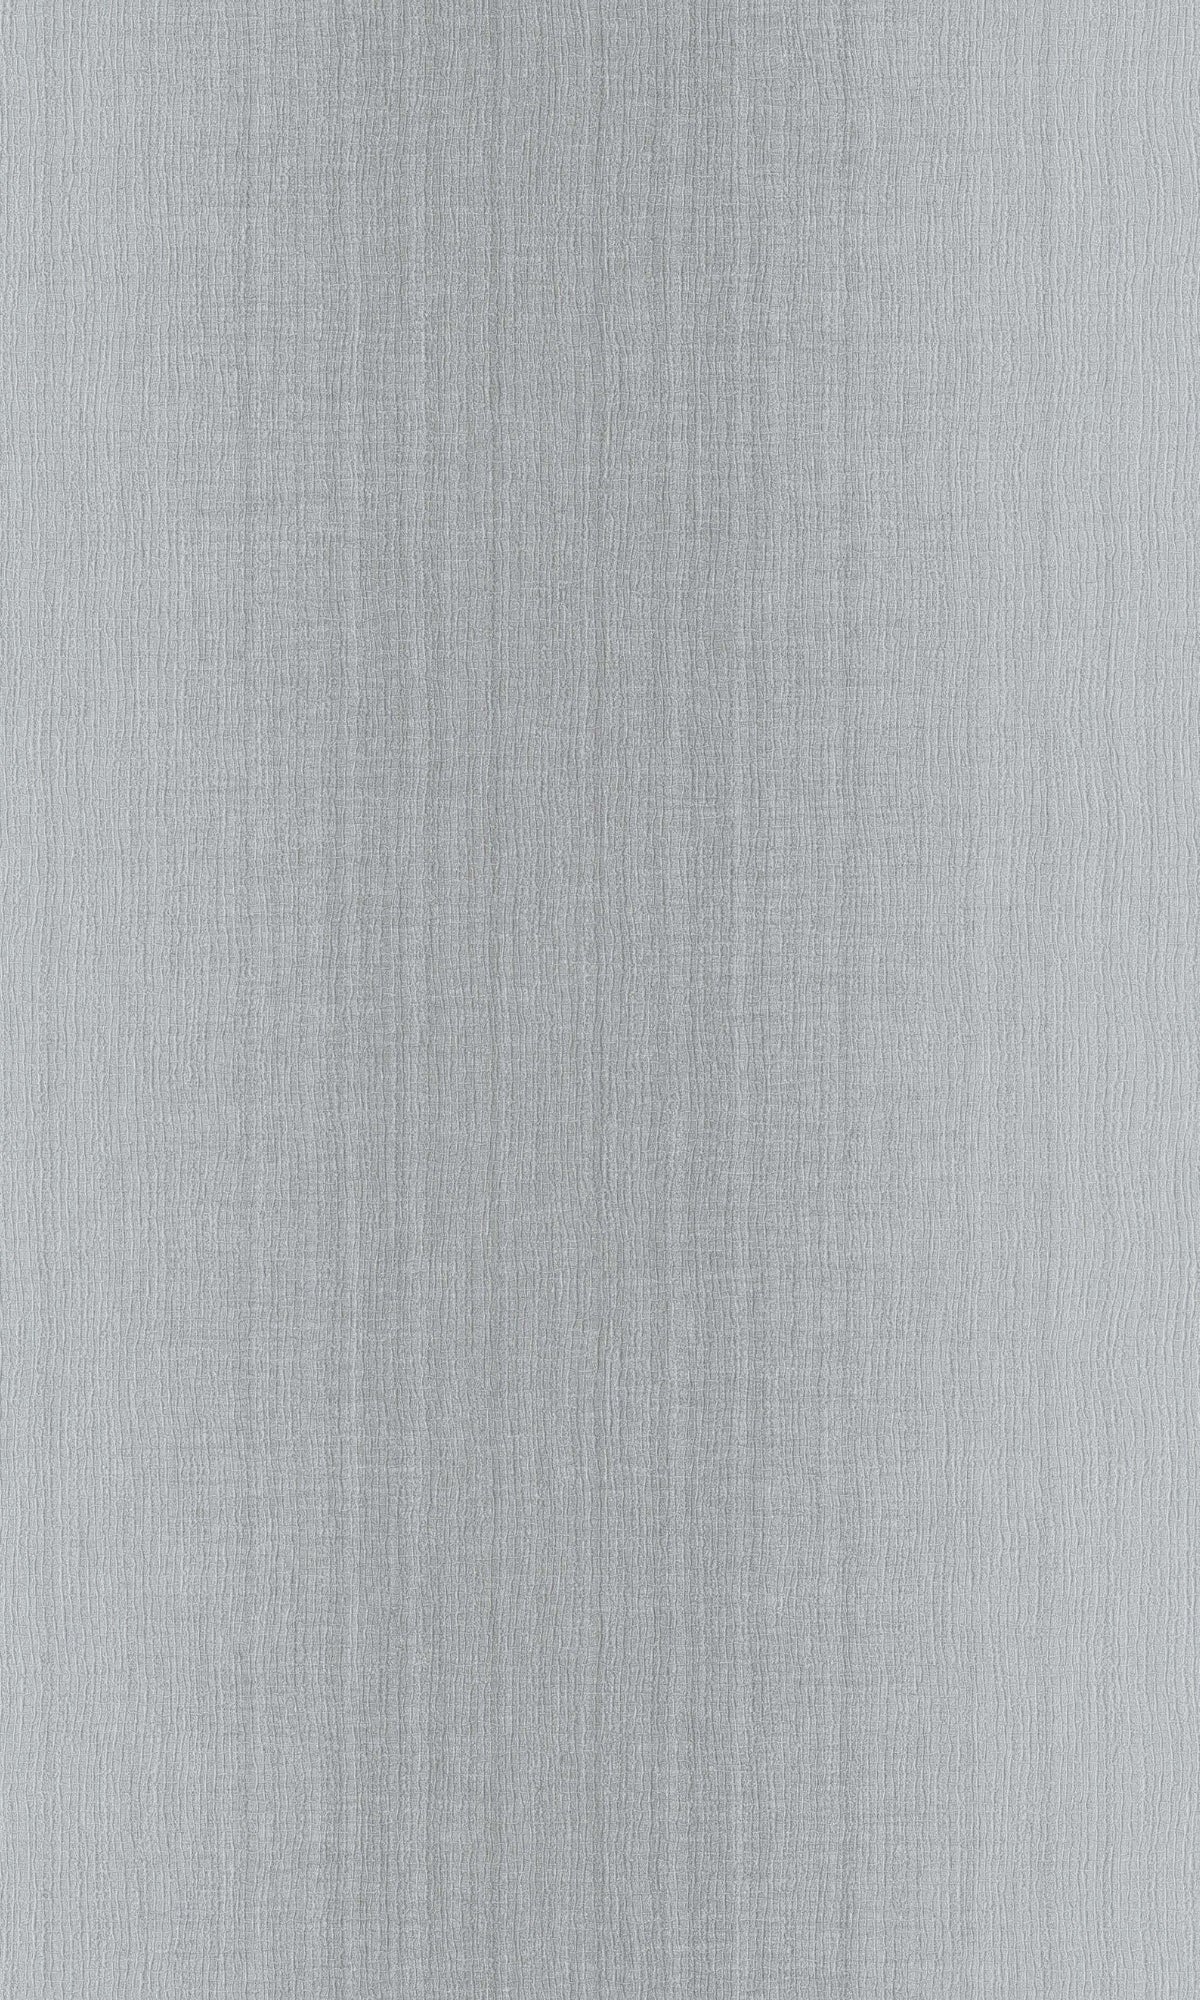 Grey Plain Textured Wallpaper R8696